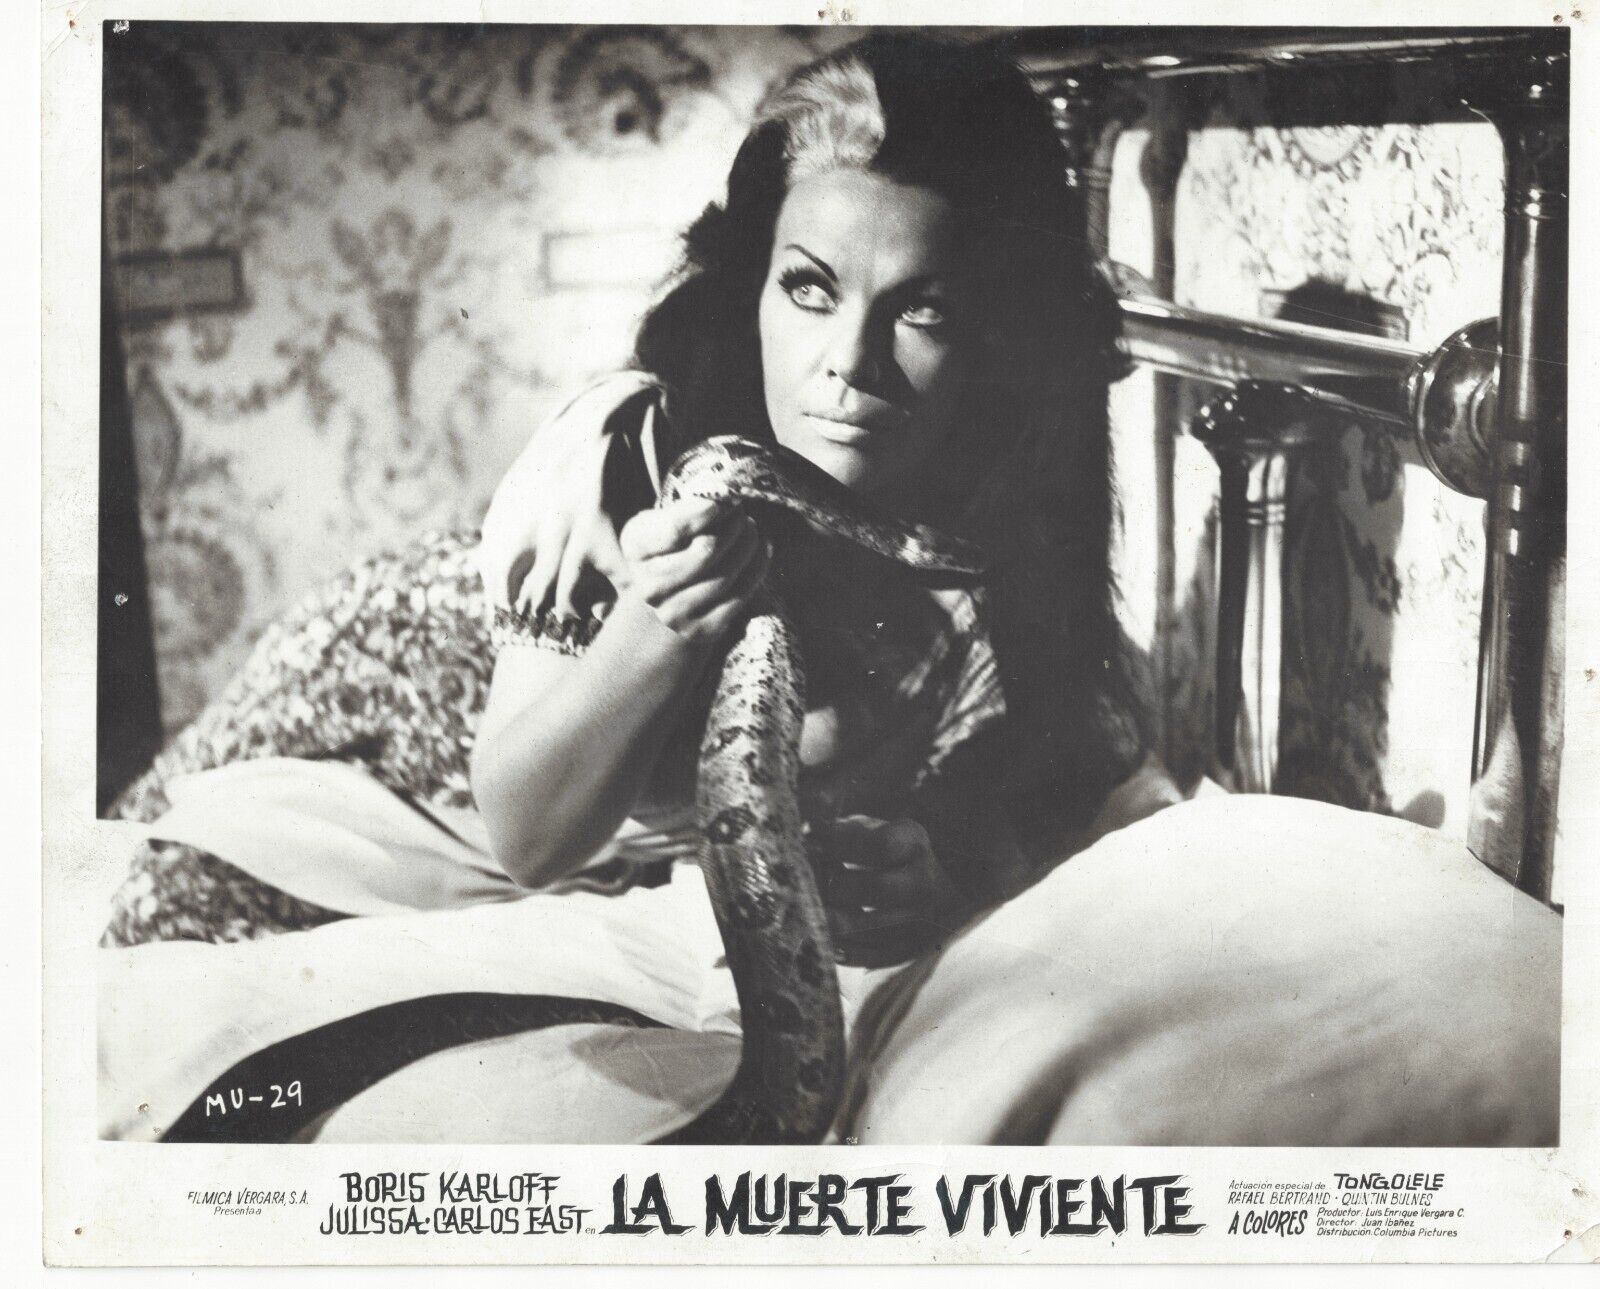 La Muerte Viviente~Isle of Snake People~Tongolele Boris Karloff~Press Photo~1971